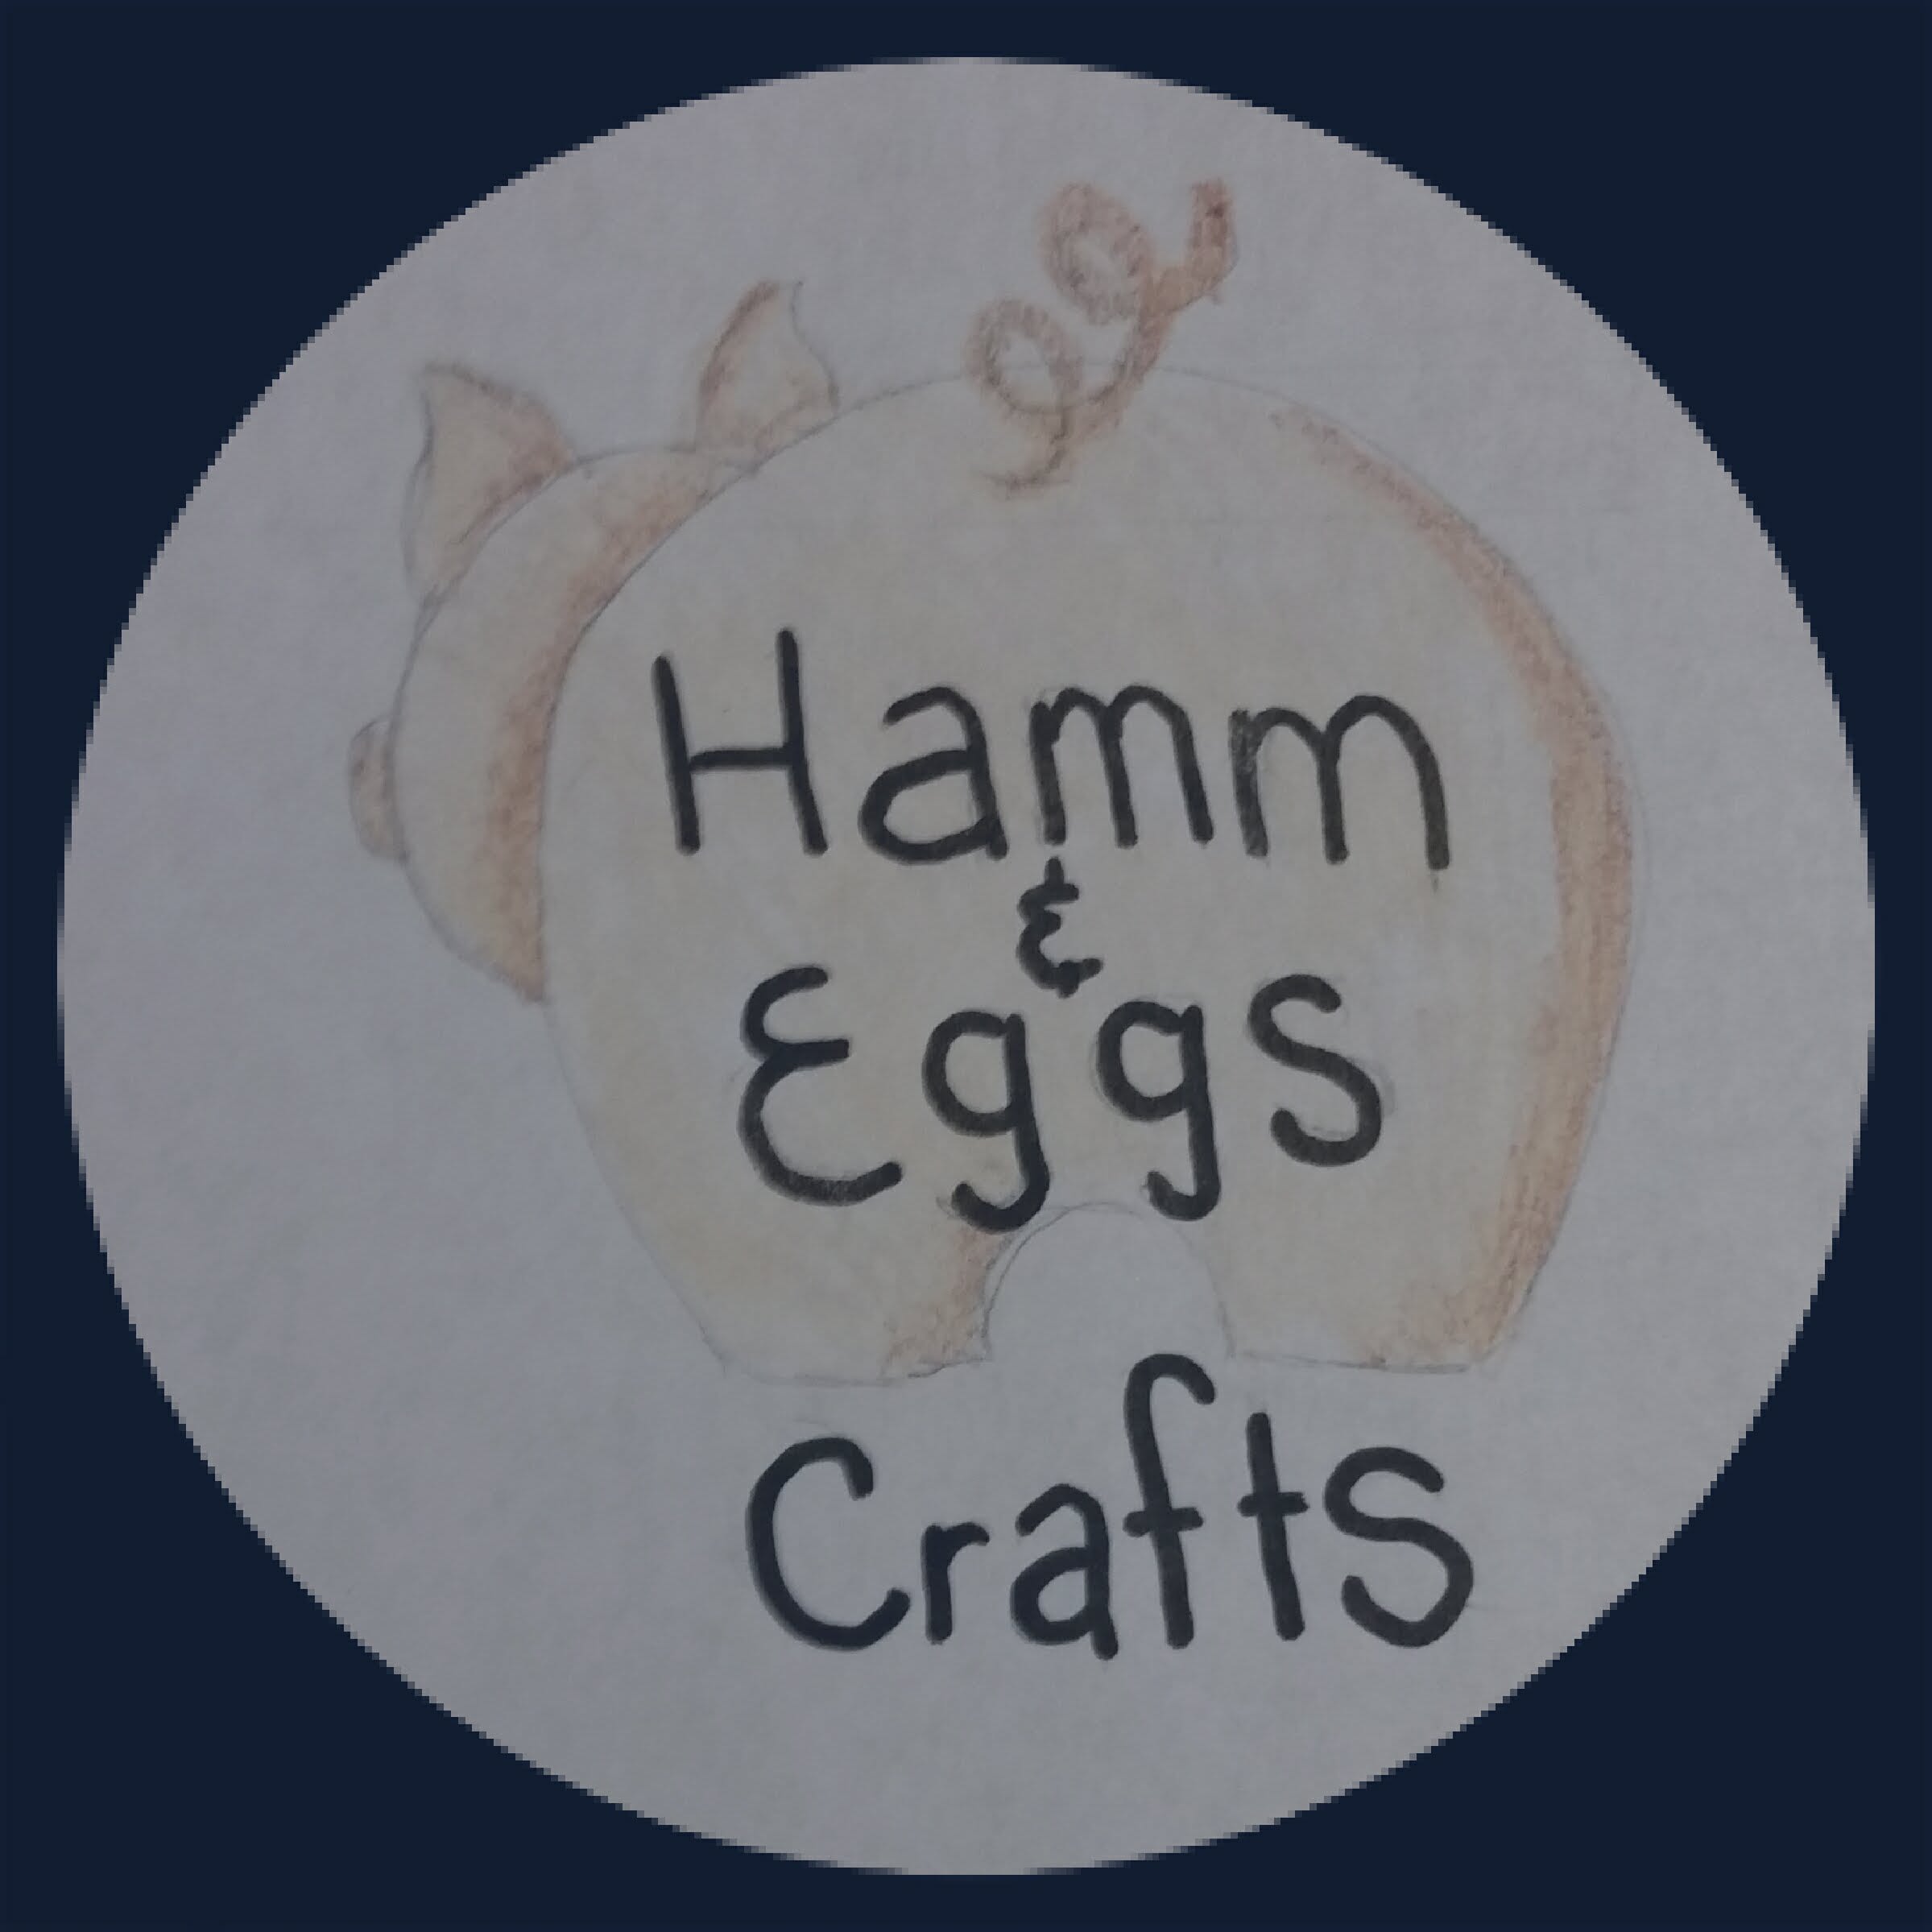 Hamm & Eggs Crafts